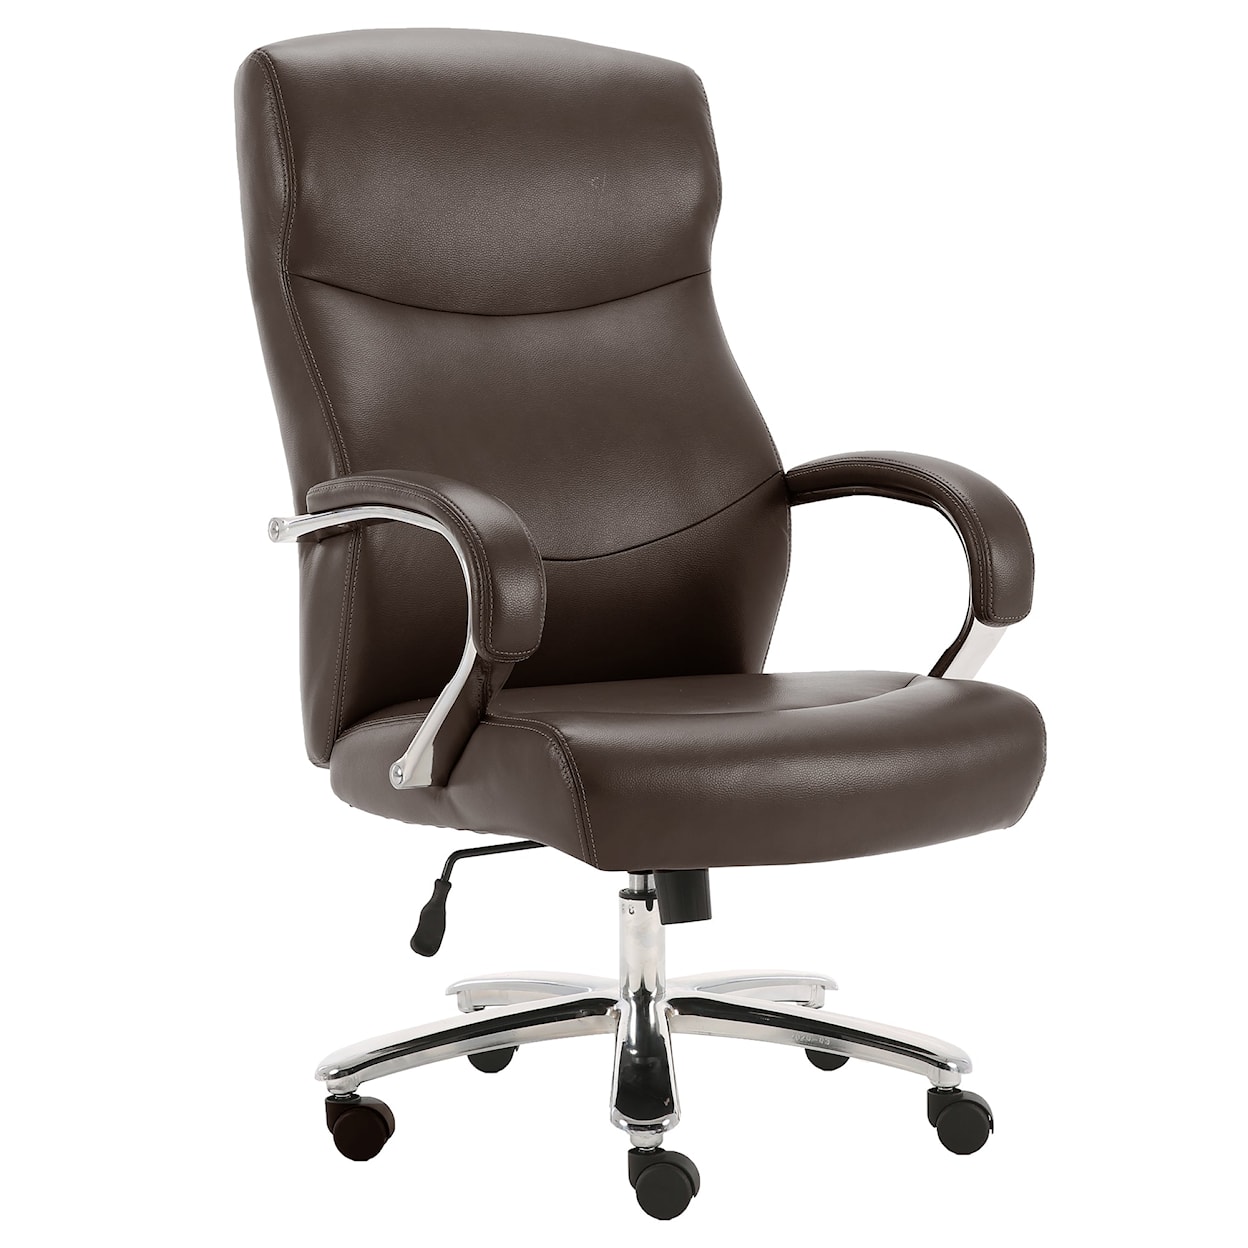 Paramount Living Dc#315Hd-Cco - Desk Chair Desk Chair